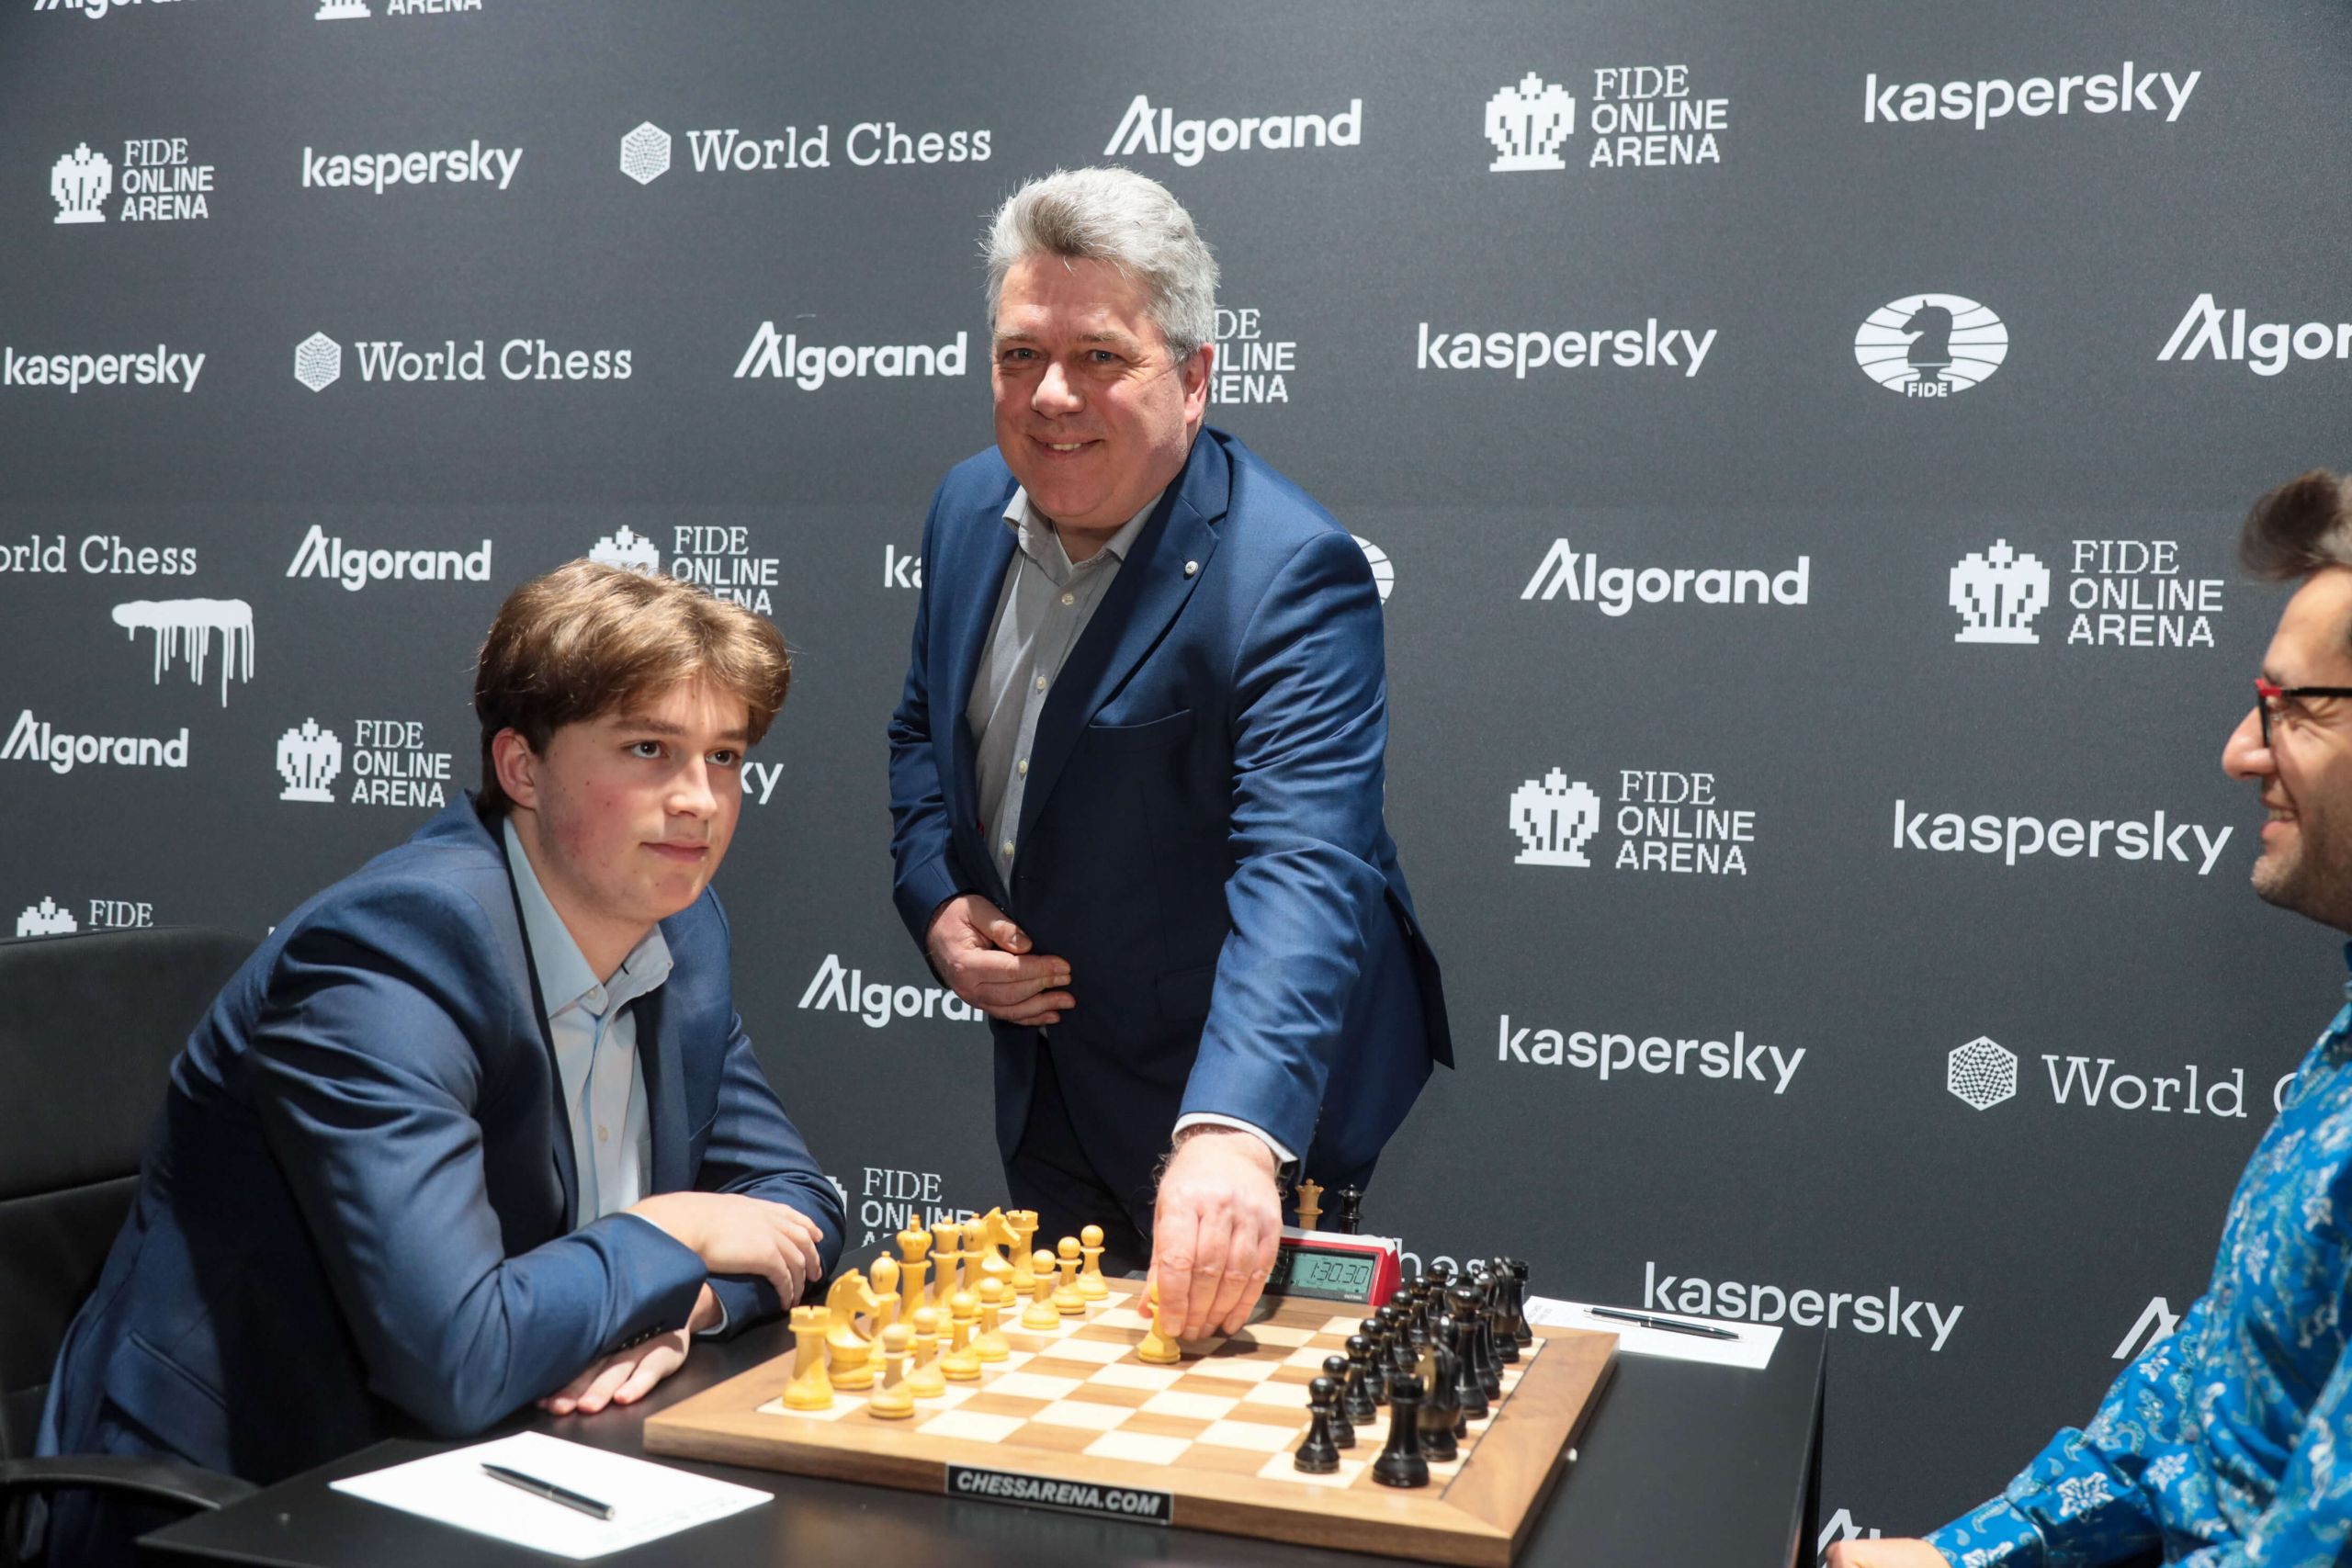 Final Game 1, Berlin FIDE Grand Prix, Leg 3